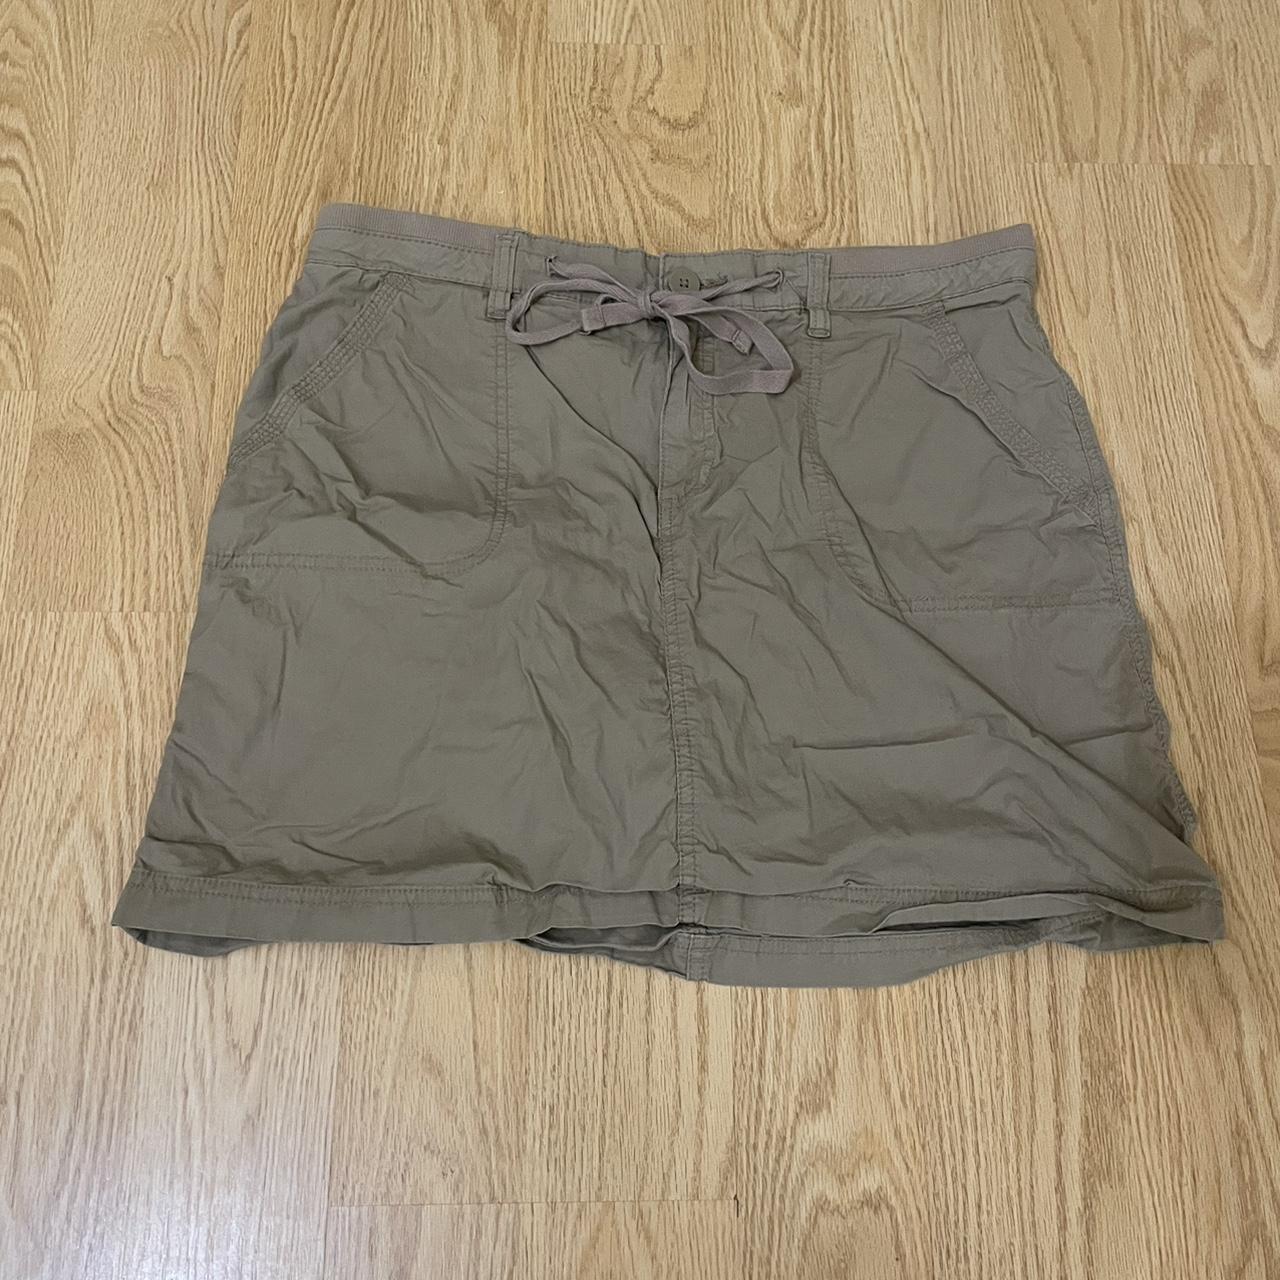 - Mini Cargo skirt - shorts inside - true to size - Depop